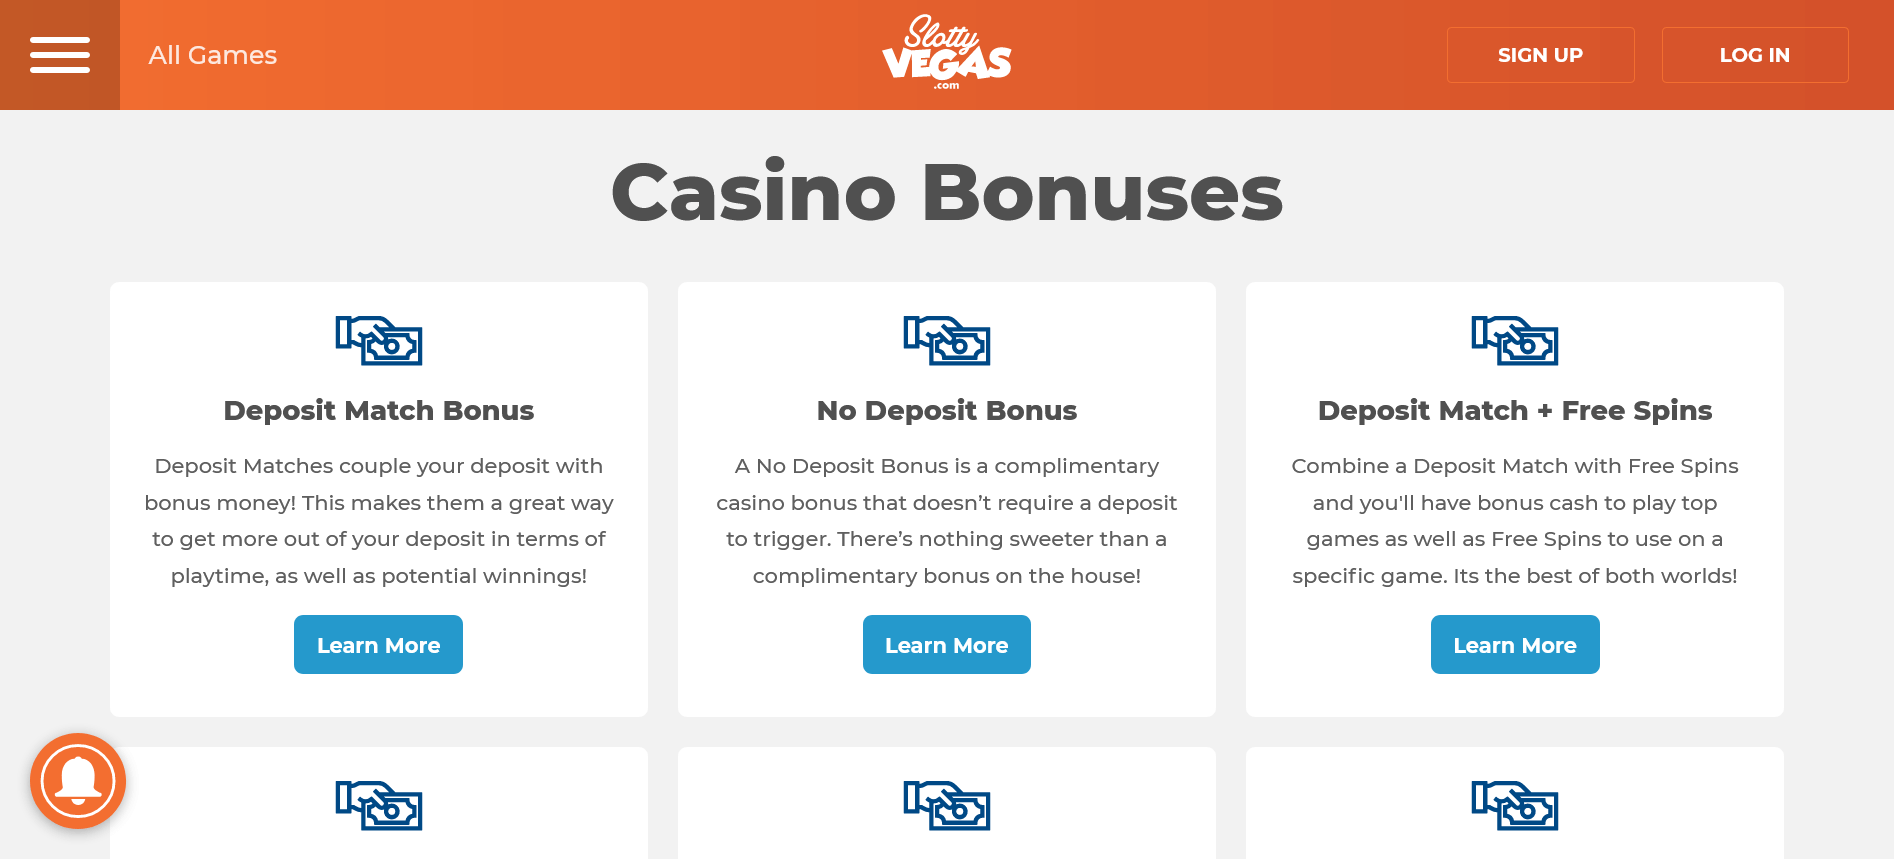 Slotty Vegas Casino Bonuses